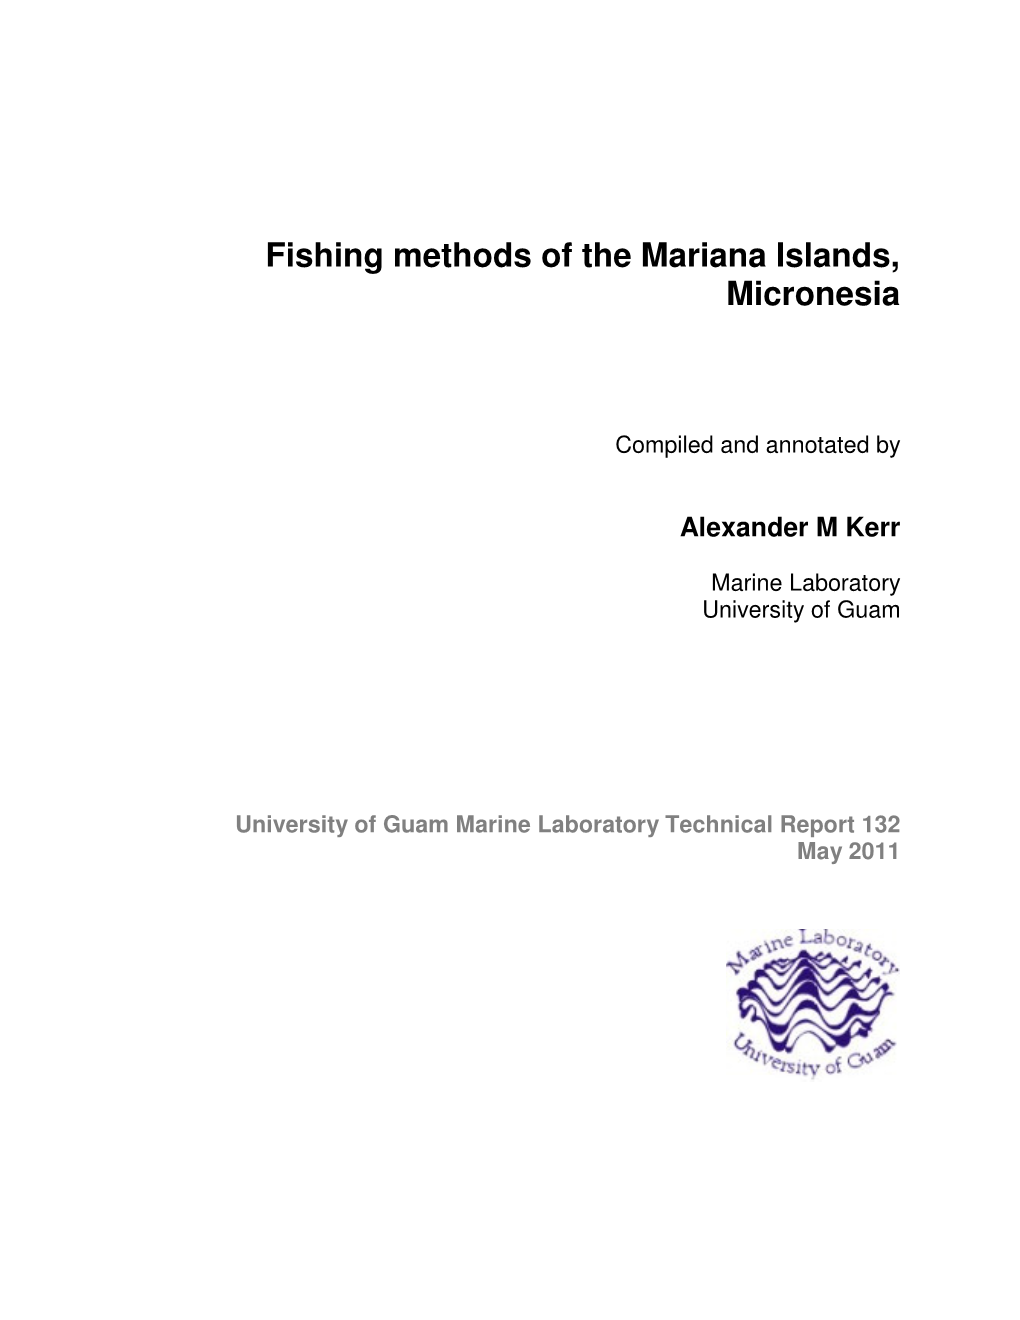 Fishing Methods of the Mariana Islands, Micronesia